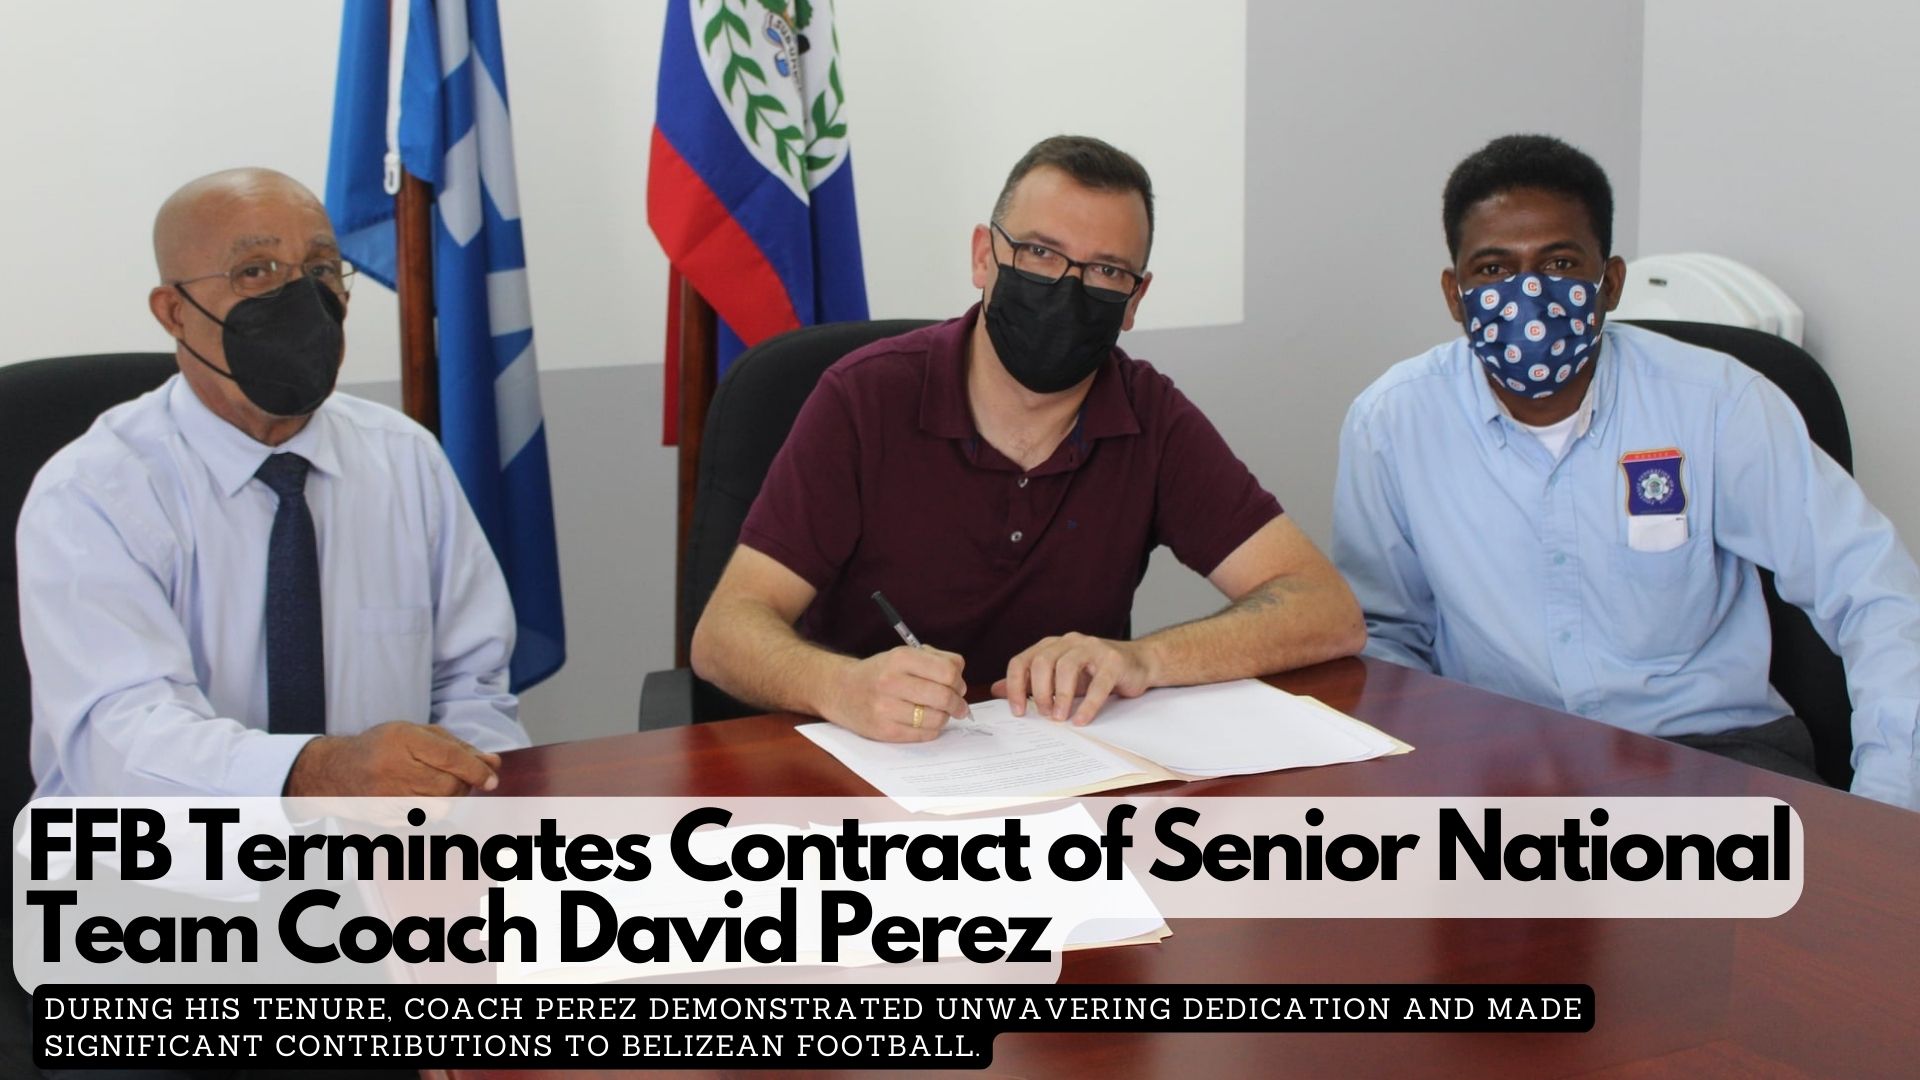 FFB Terminates Contract of Senior National Team Coach David Perez